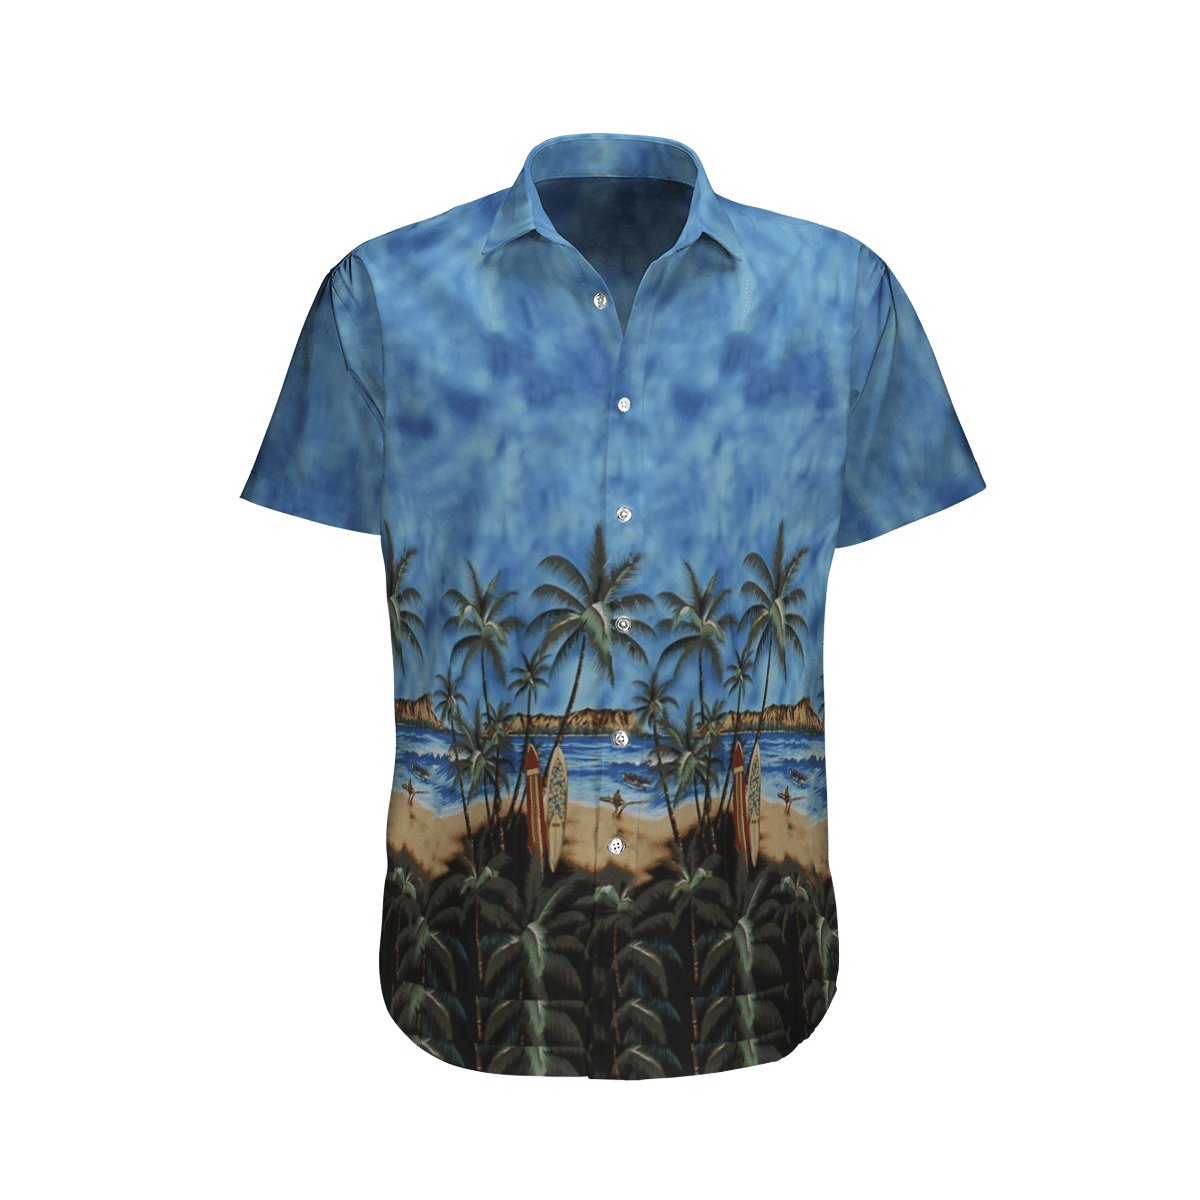 Get a new Hawaiian shirt to enjoy summer vacation 187